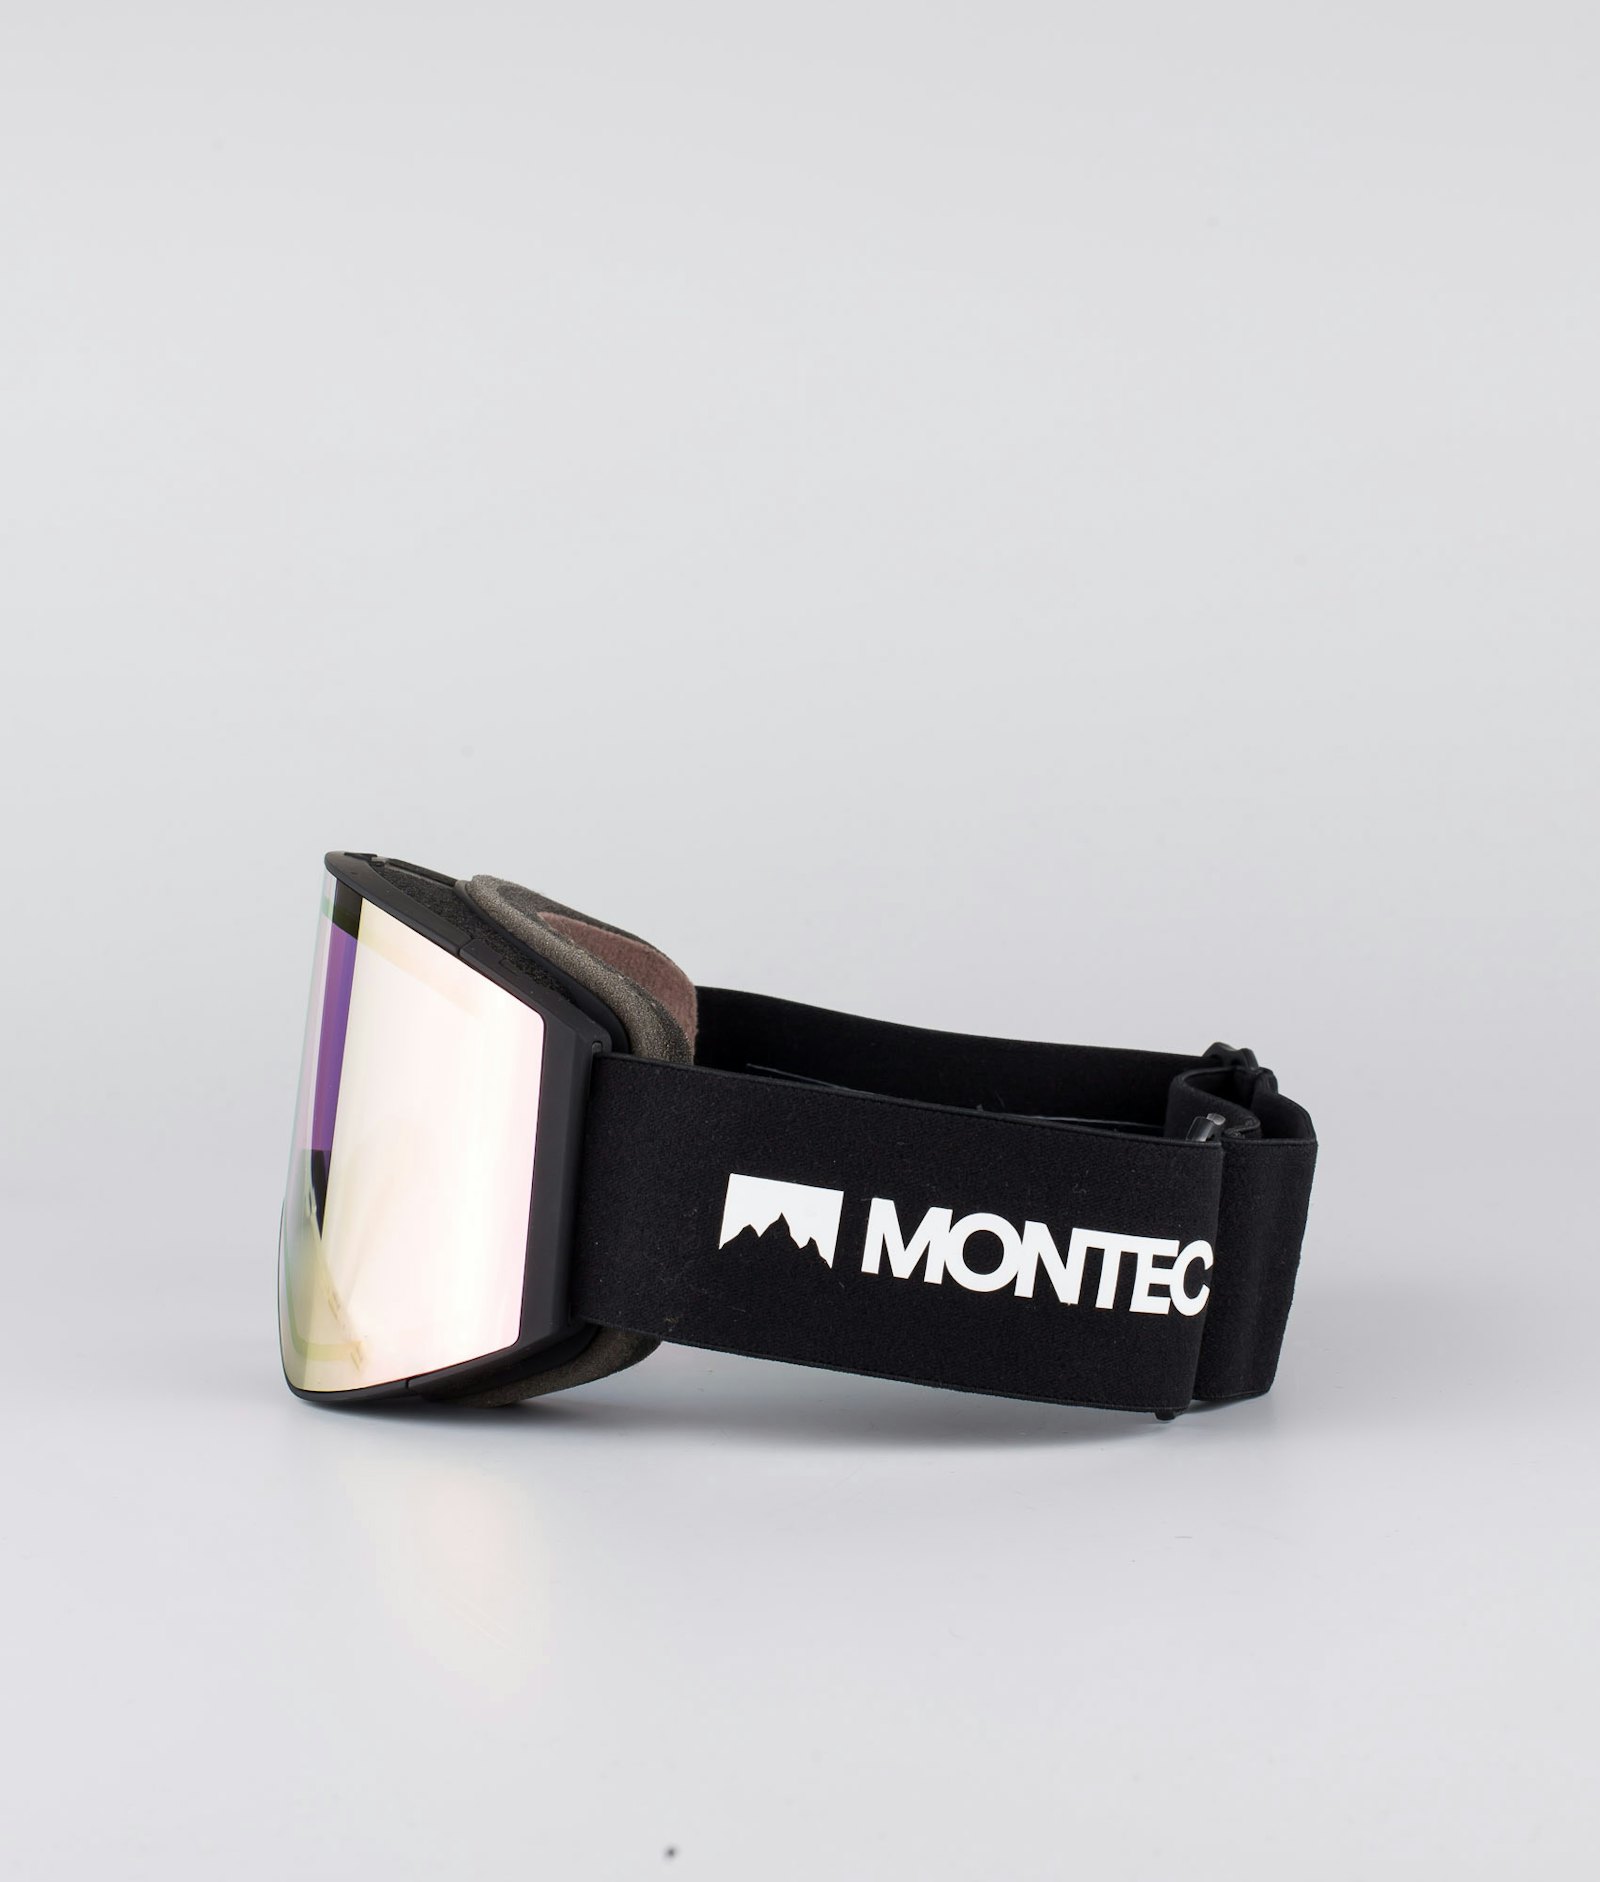 Montec Scope 2020 Large Skibrille Black/Pink Sapphire